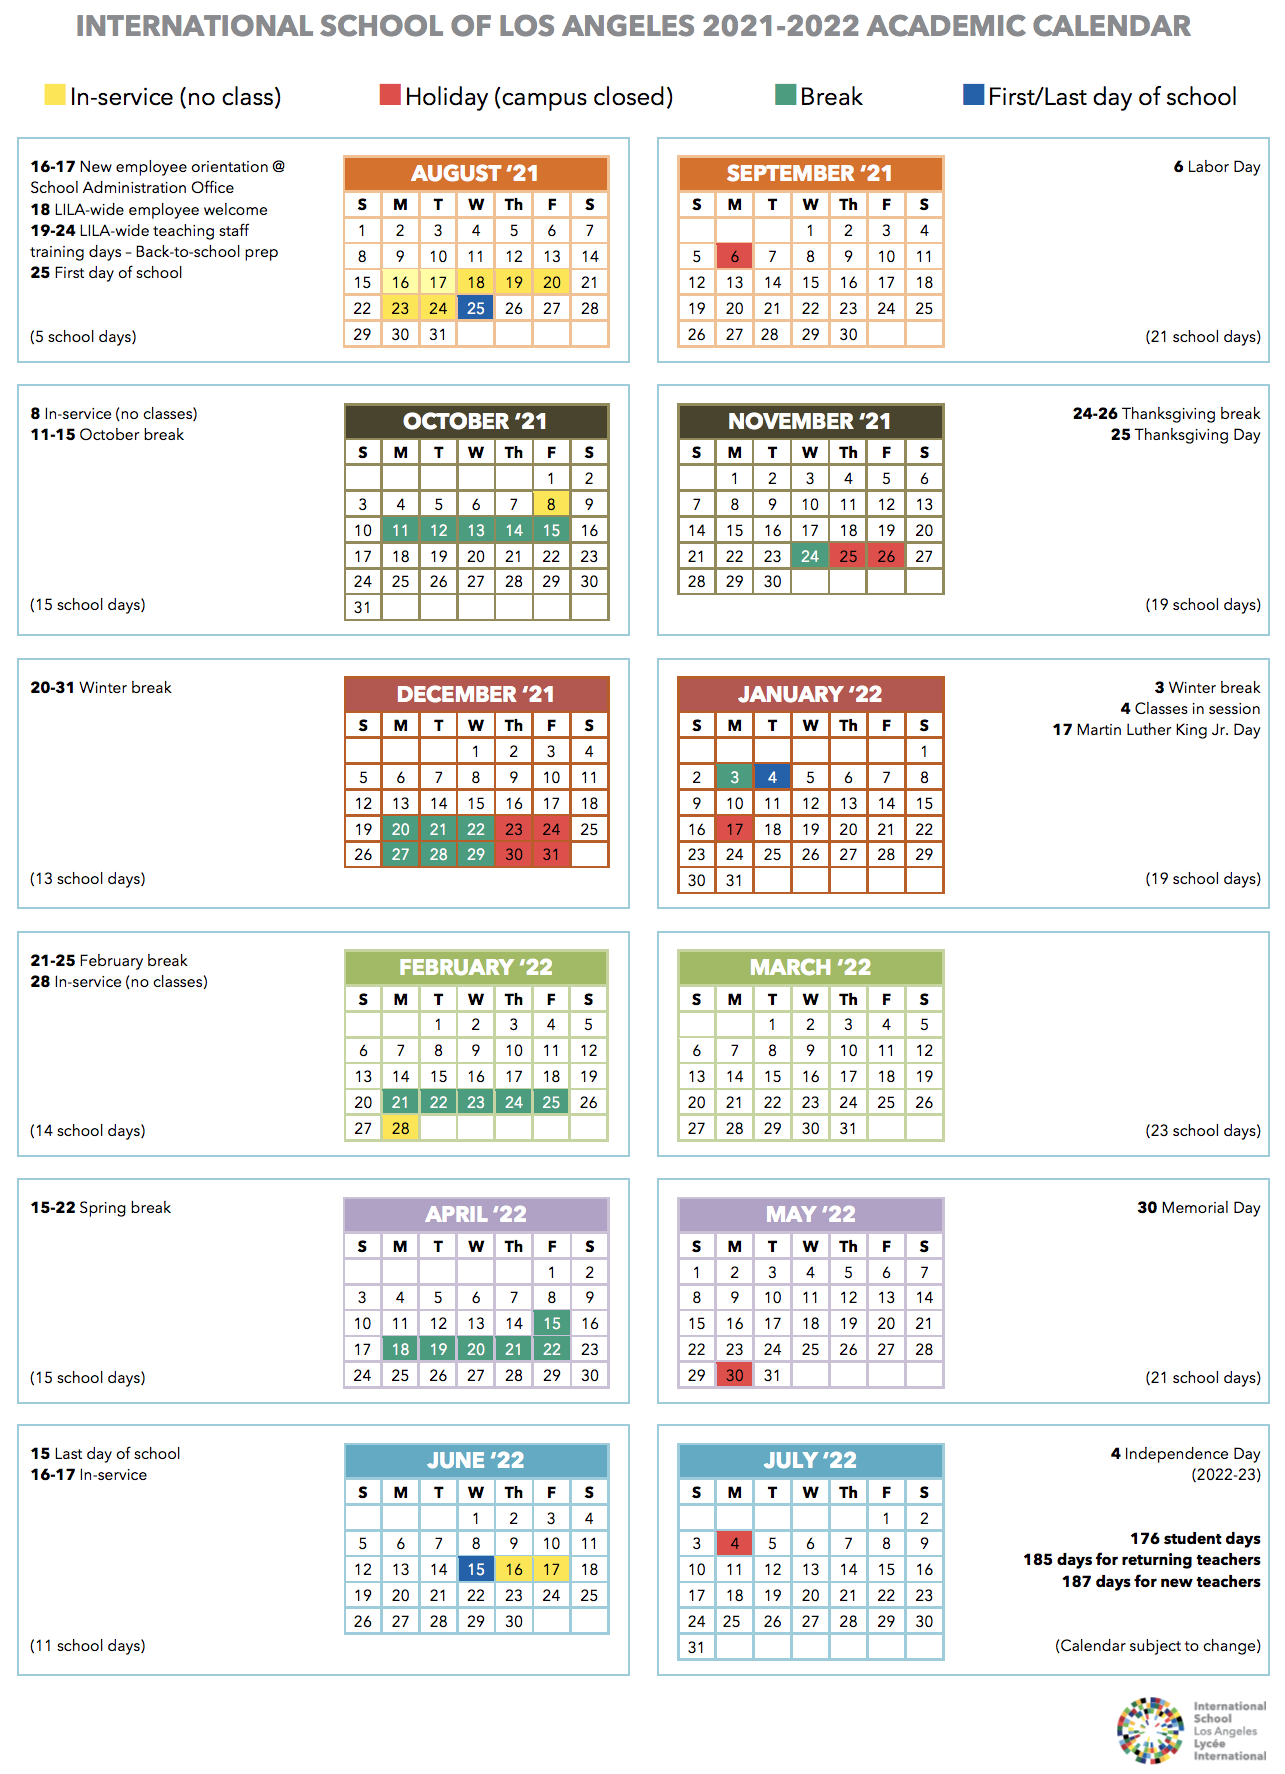 Csula Academic Calendar 2022 Calendar | International School Of Los Angeles